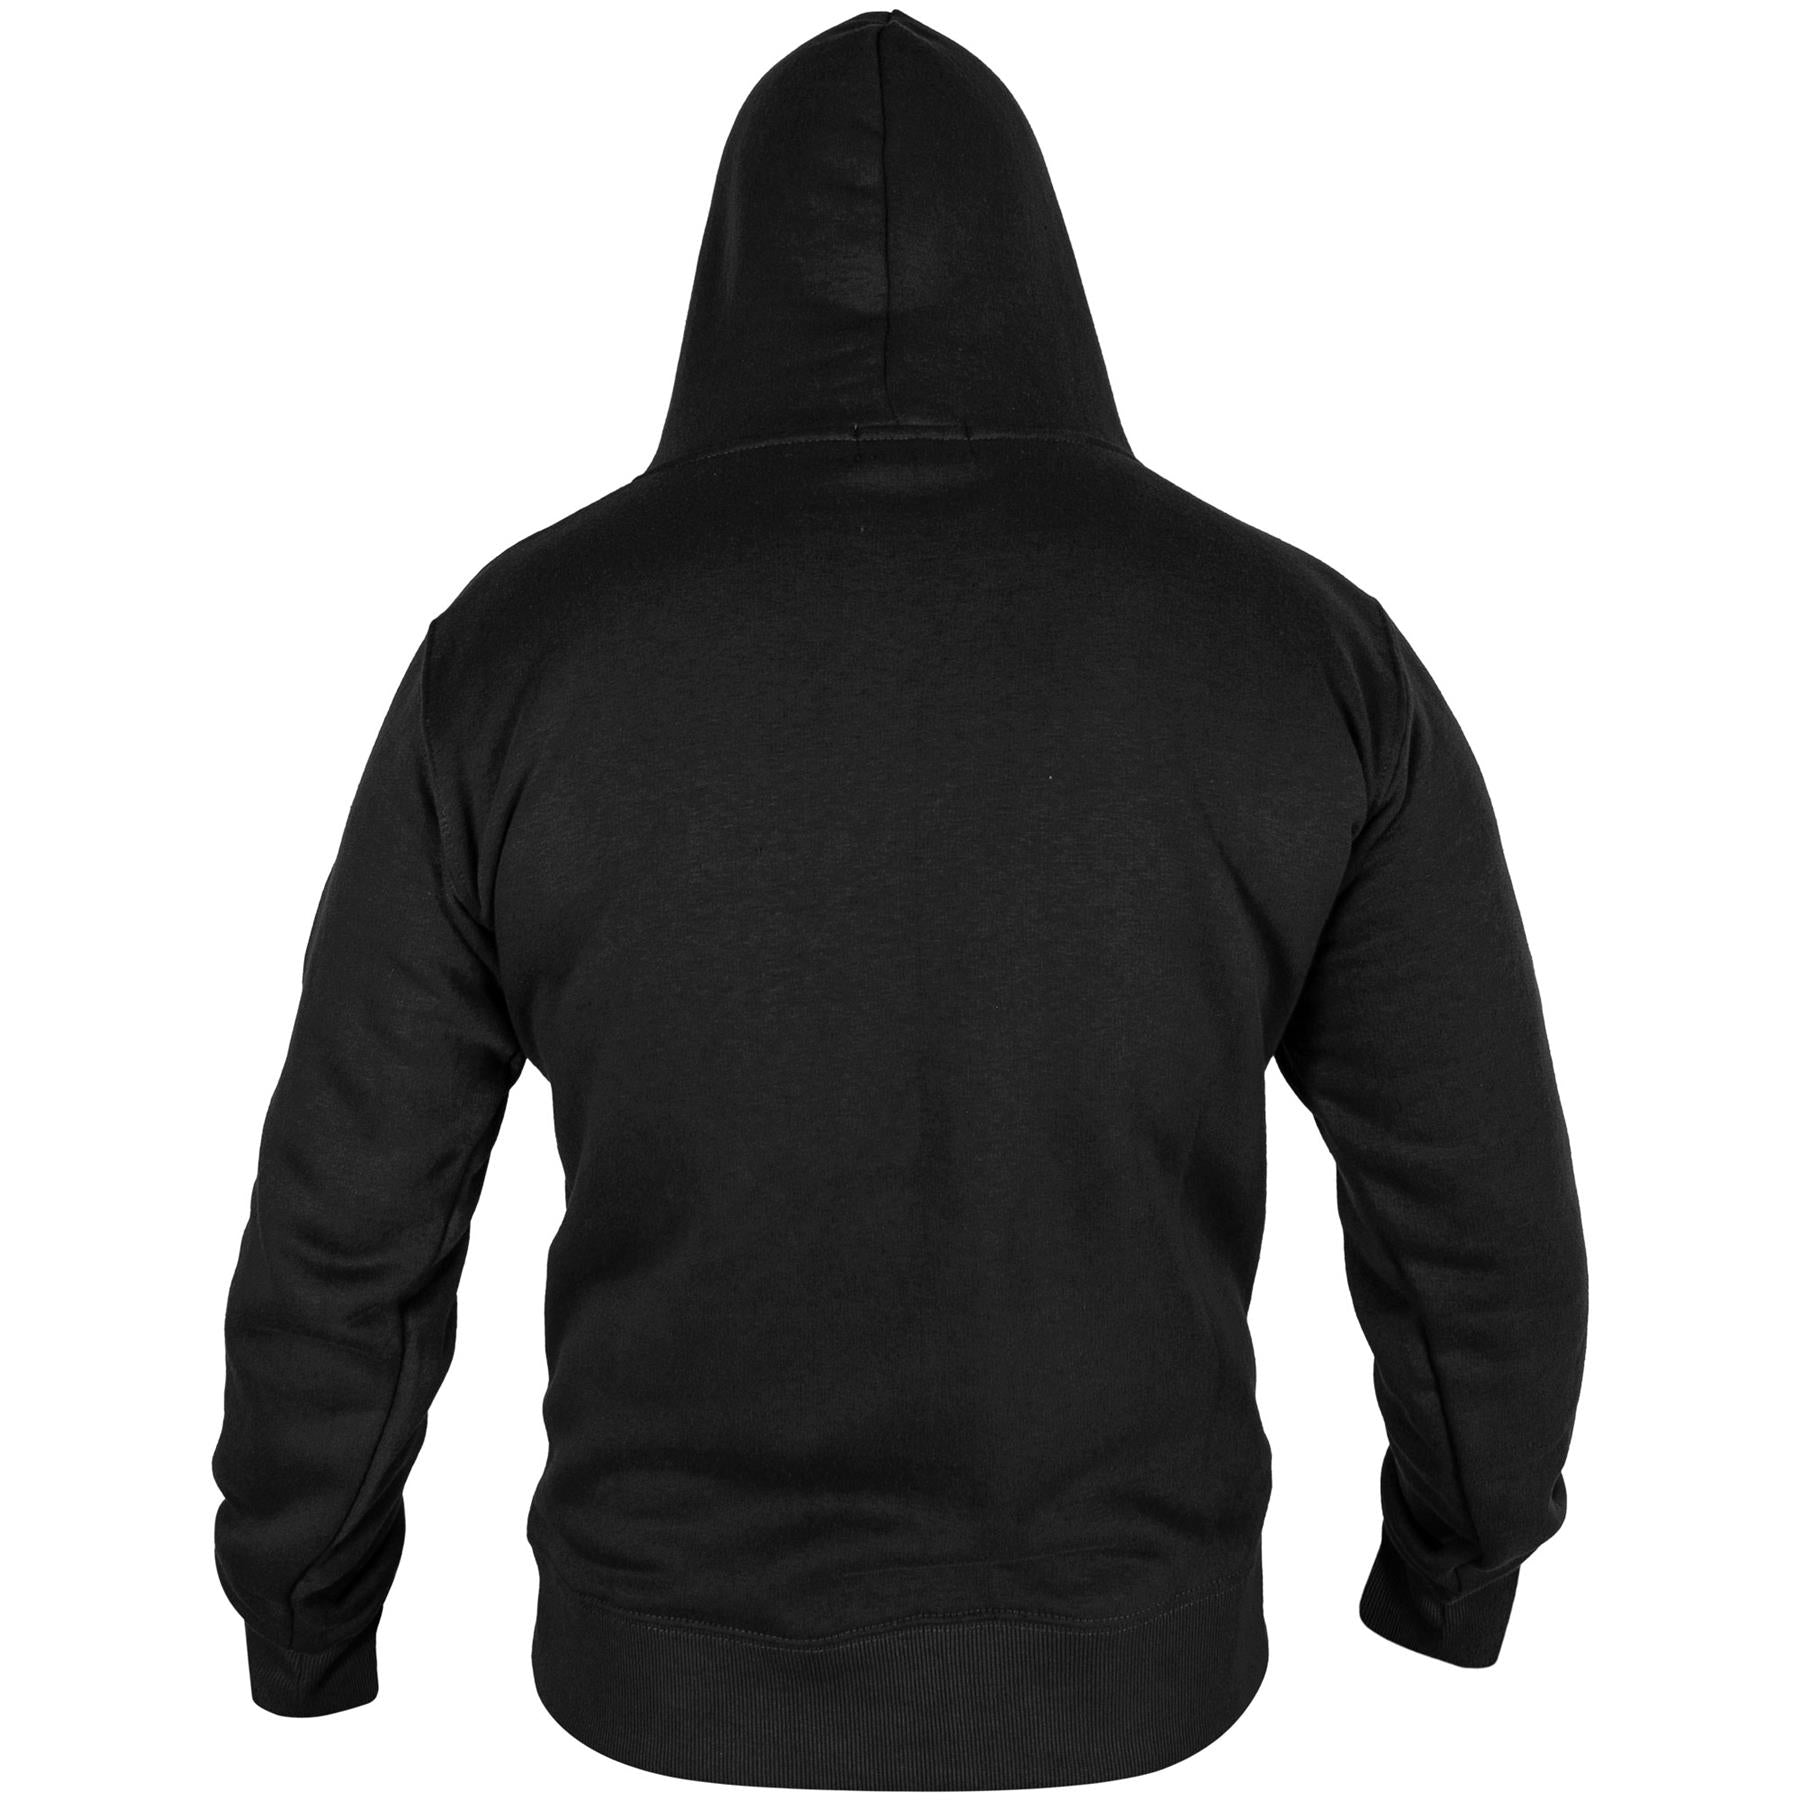 Mens Fleece Plain Zipper Hooded Long Sleeve Sweatshirt For Adults